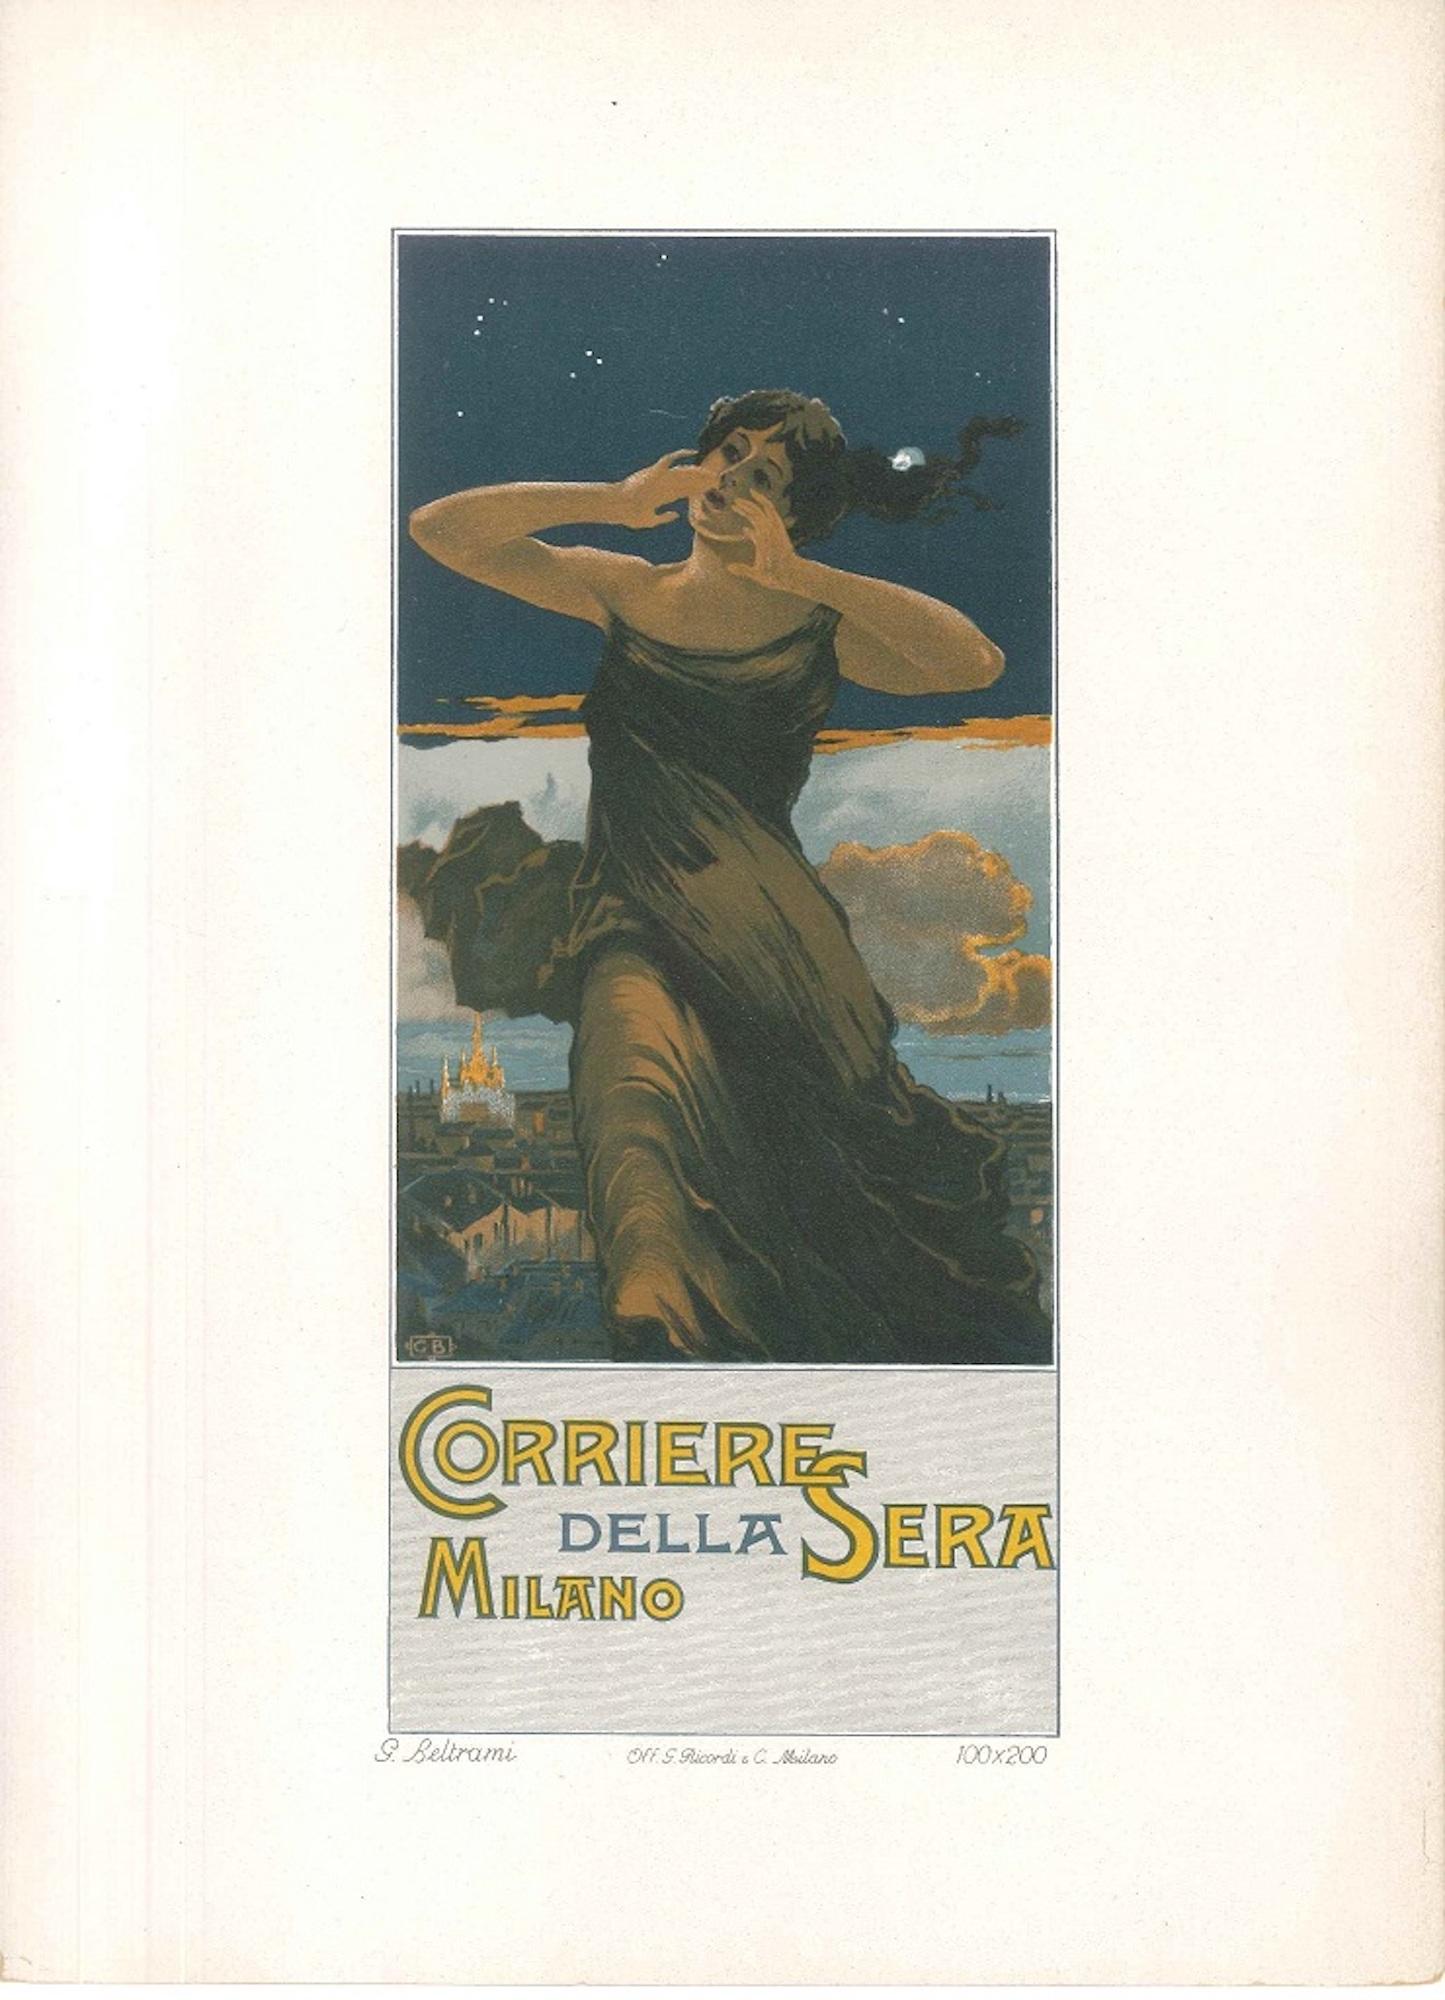 Corriere della Sera - Original Advertising Lithograph by G. Beltrami - 1910 - Print by Giovanni Beltrami